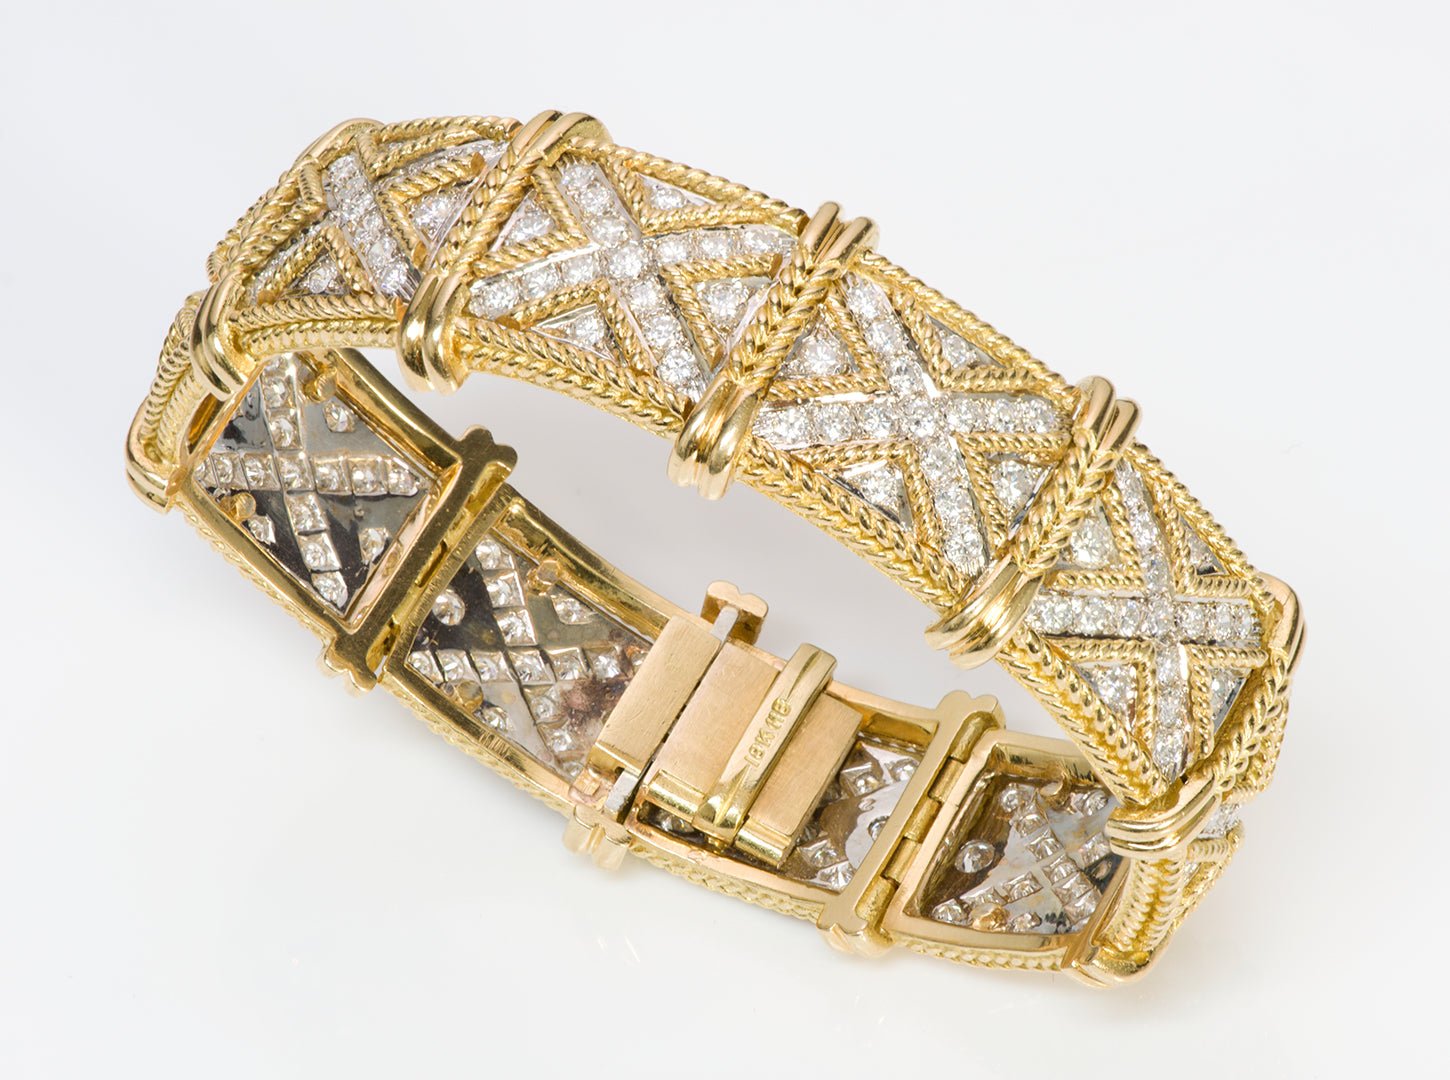 Hammerman Brothers 18K Yellow Gold Diamond Bracelet